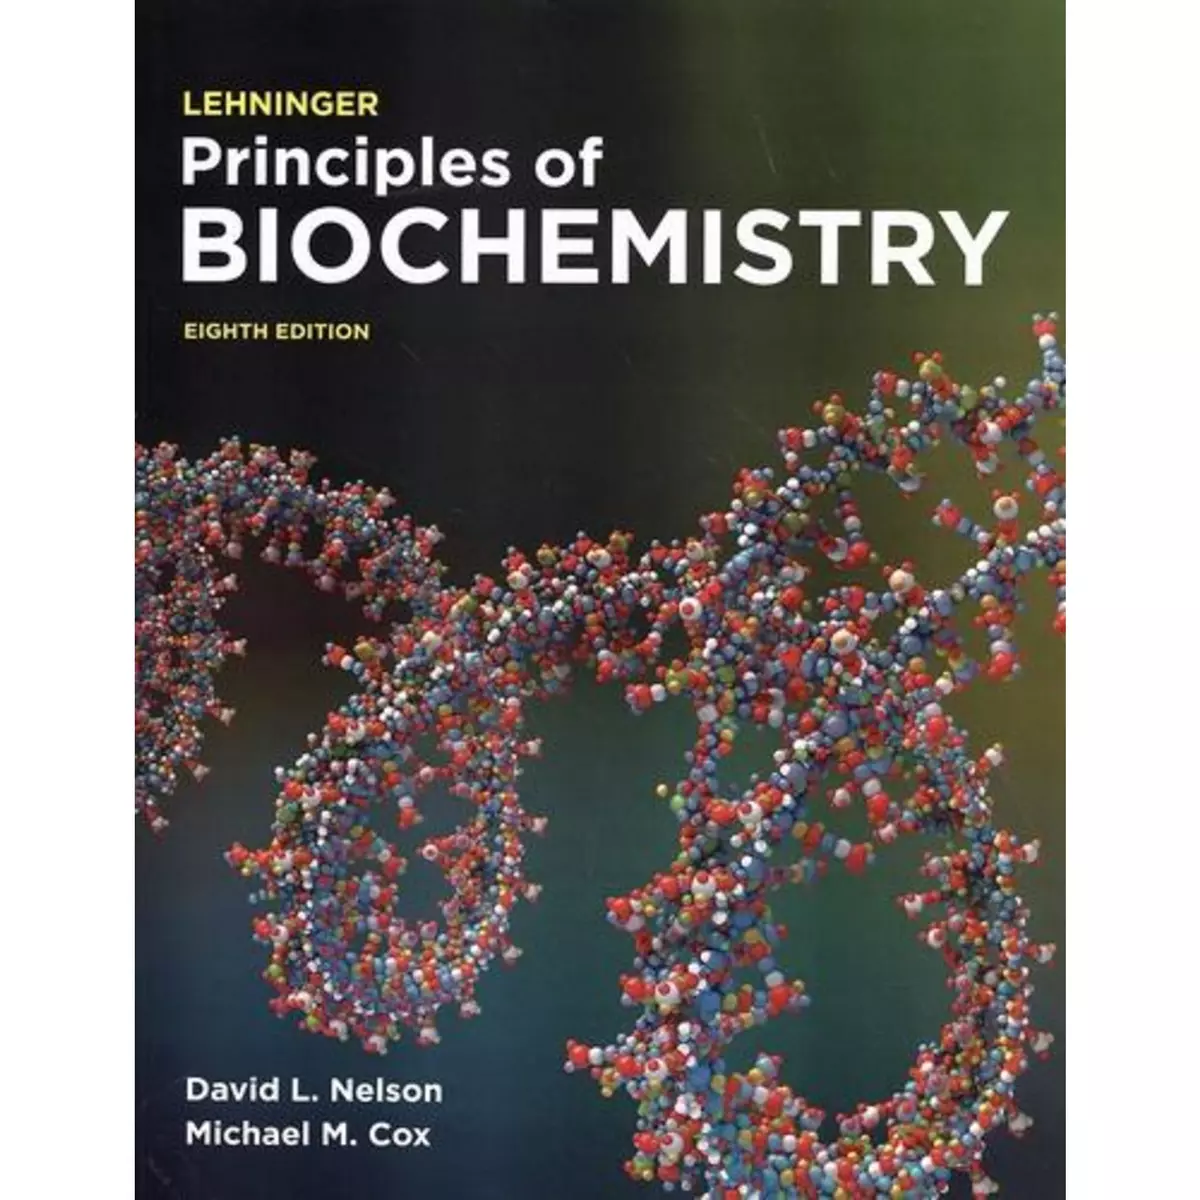  LEHNINGER PRINCIPLES OF BIOCHEMISTRY. 8TH EDITION. EDITION EN ANGLAIS, Nelson David L.